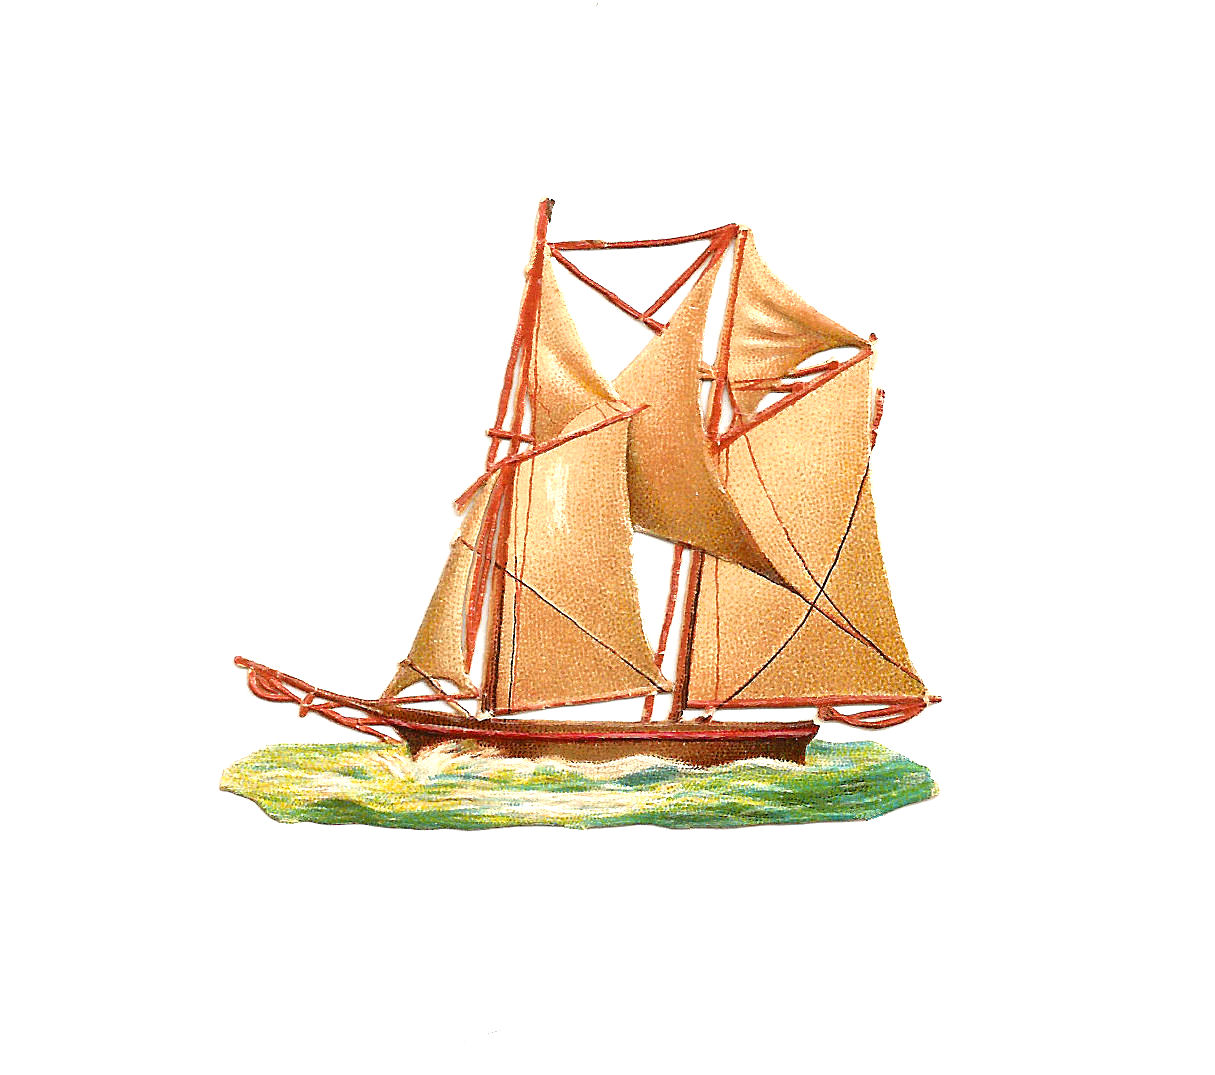 sailing ship clip art - photo #49